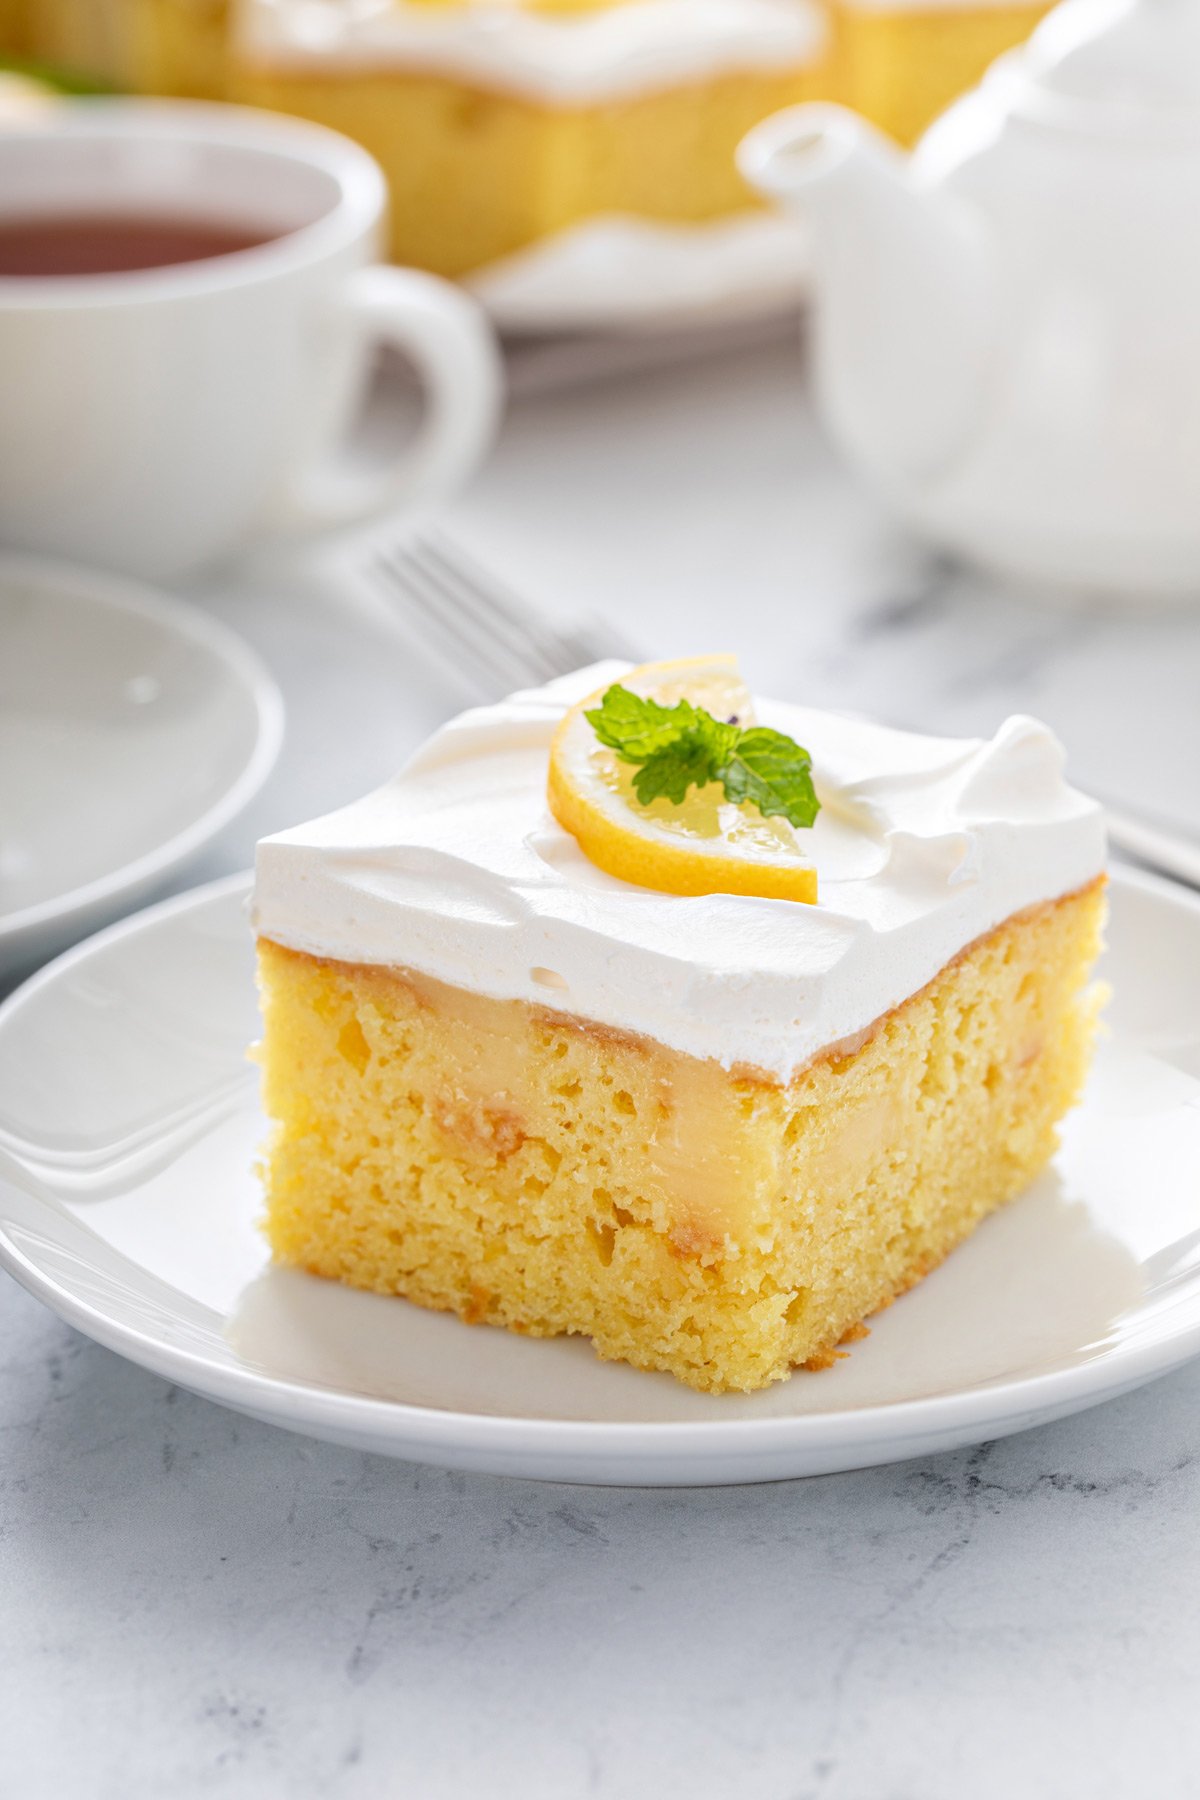 Close up image of a slice of lemon poke cake on a white plate.